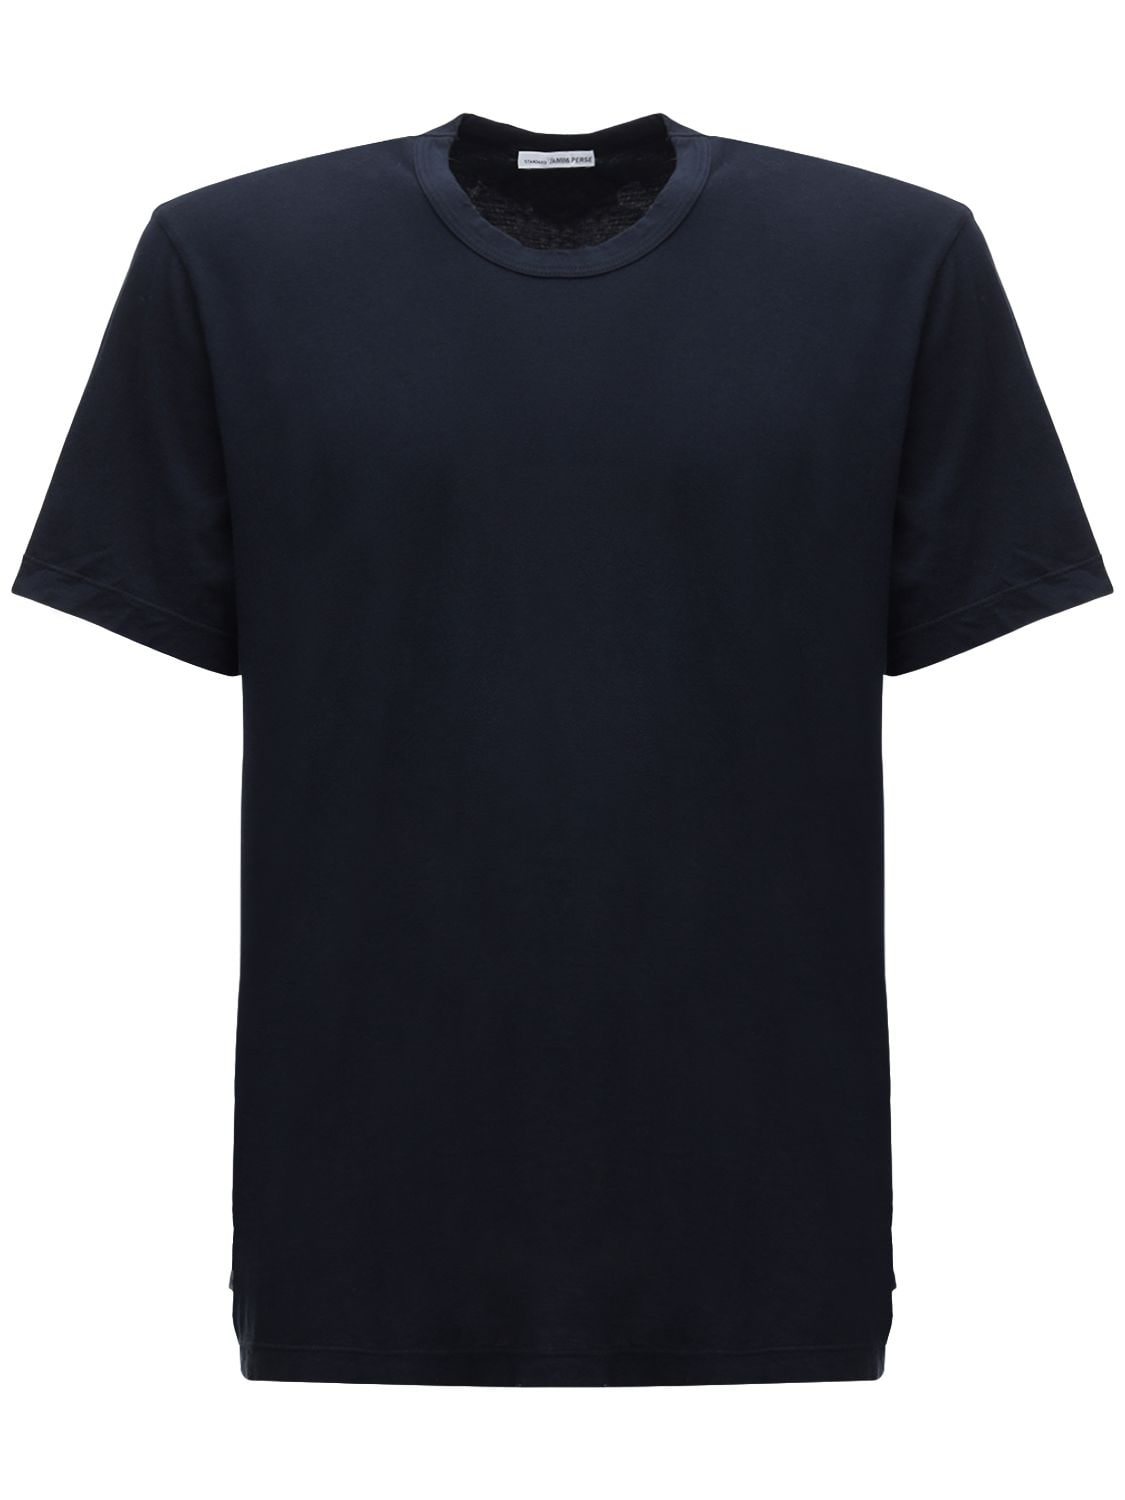 James Perse Lightweight Cotton Jersey T-shirt In Navy